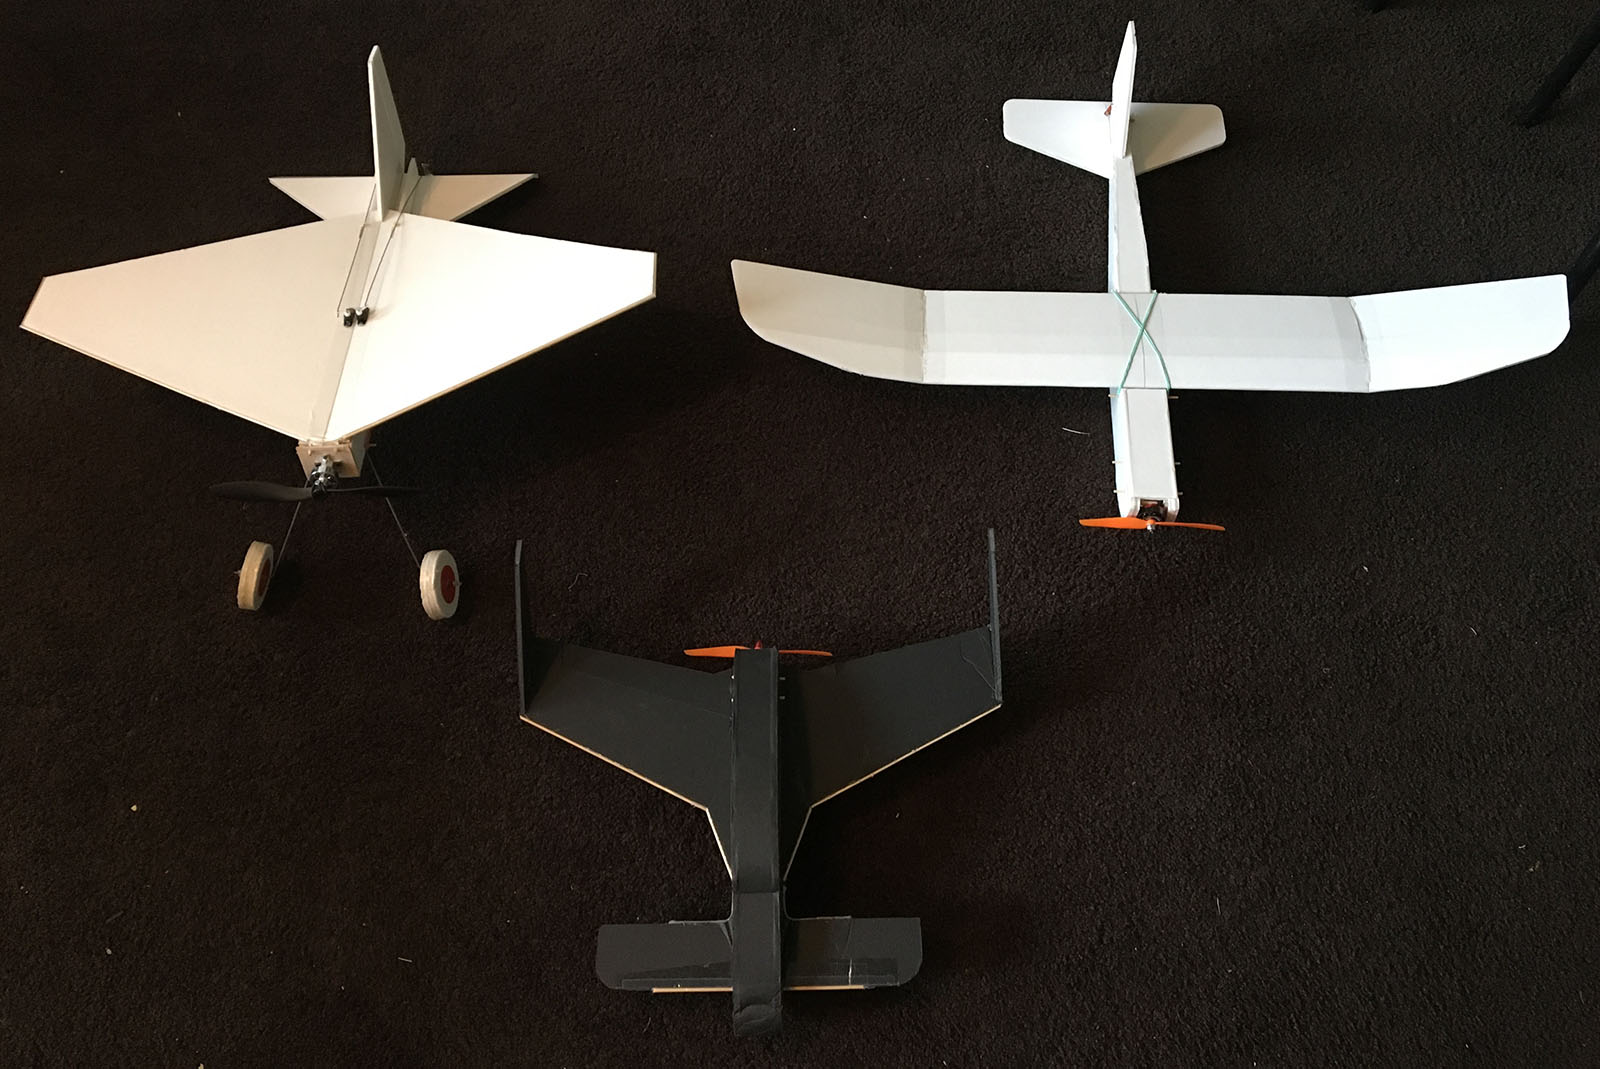 Three foam planes